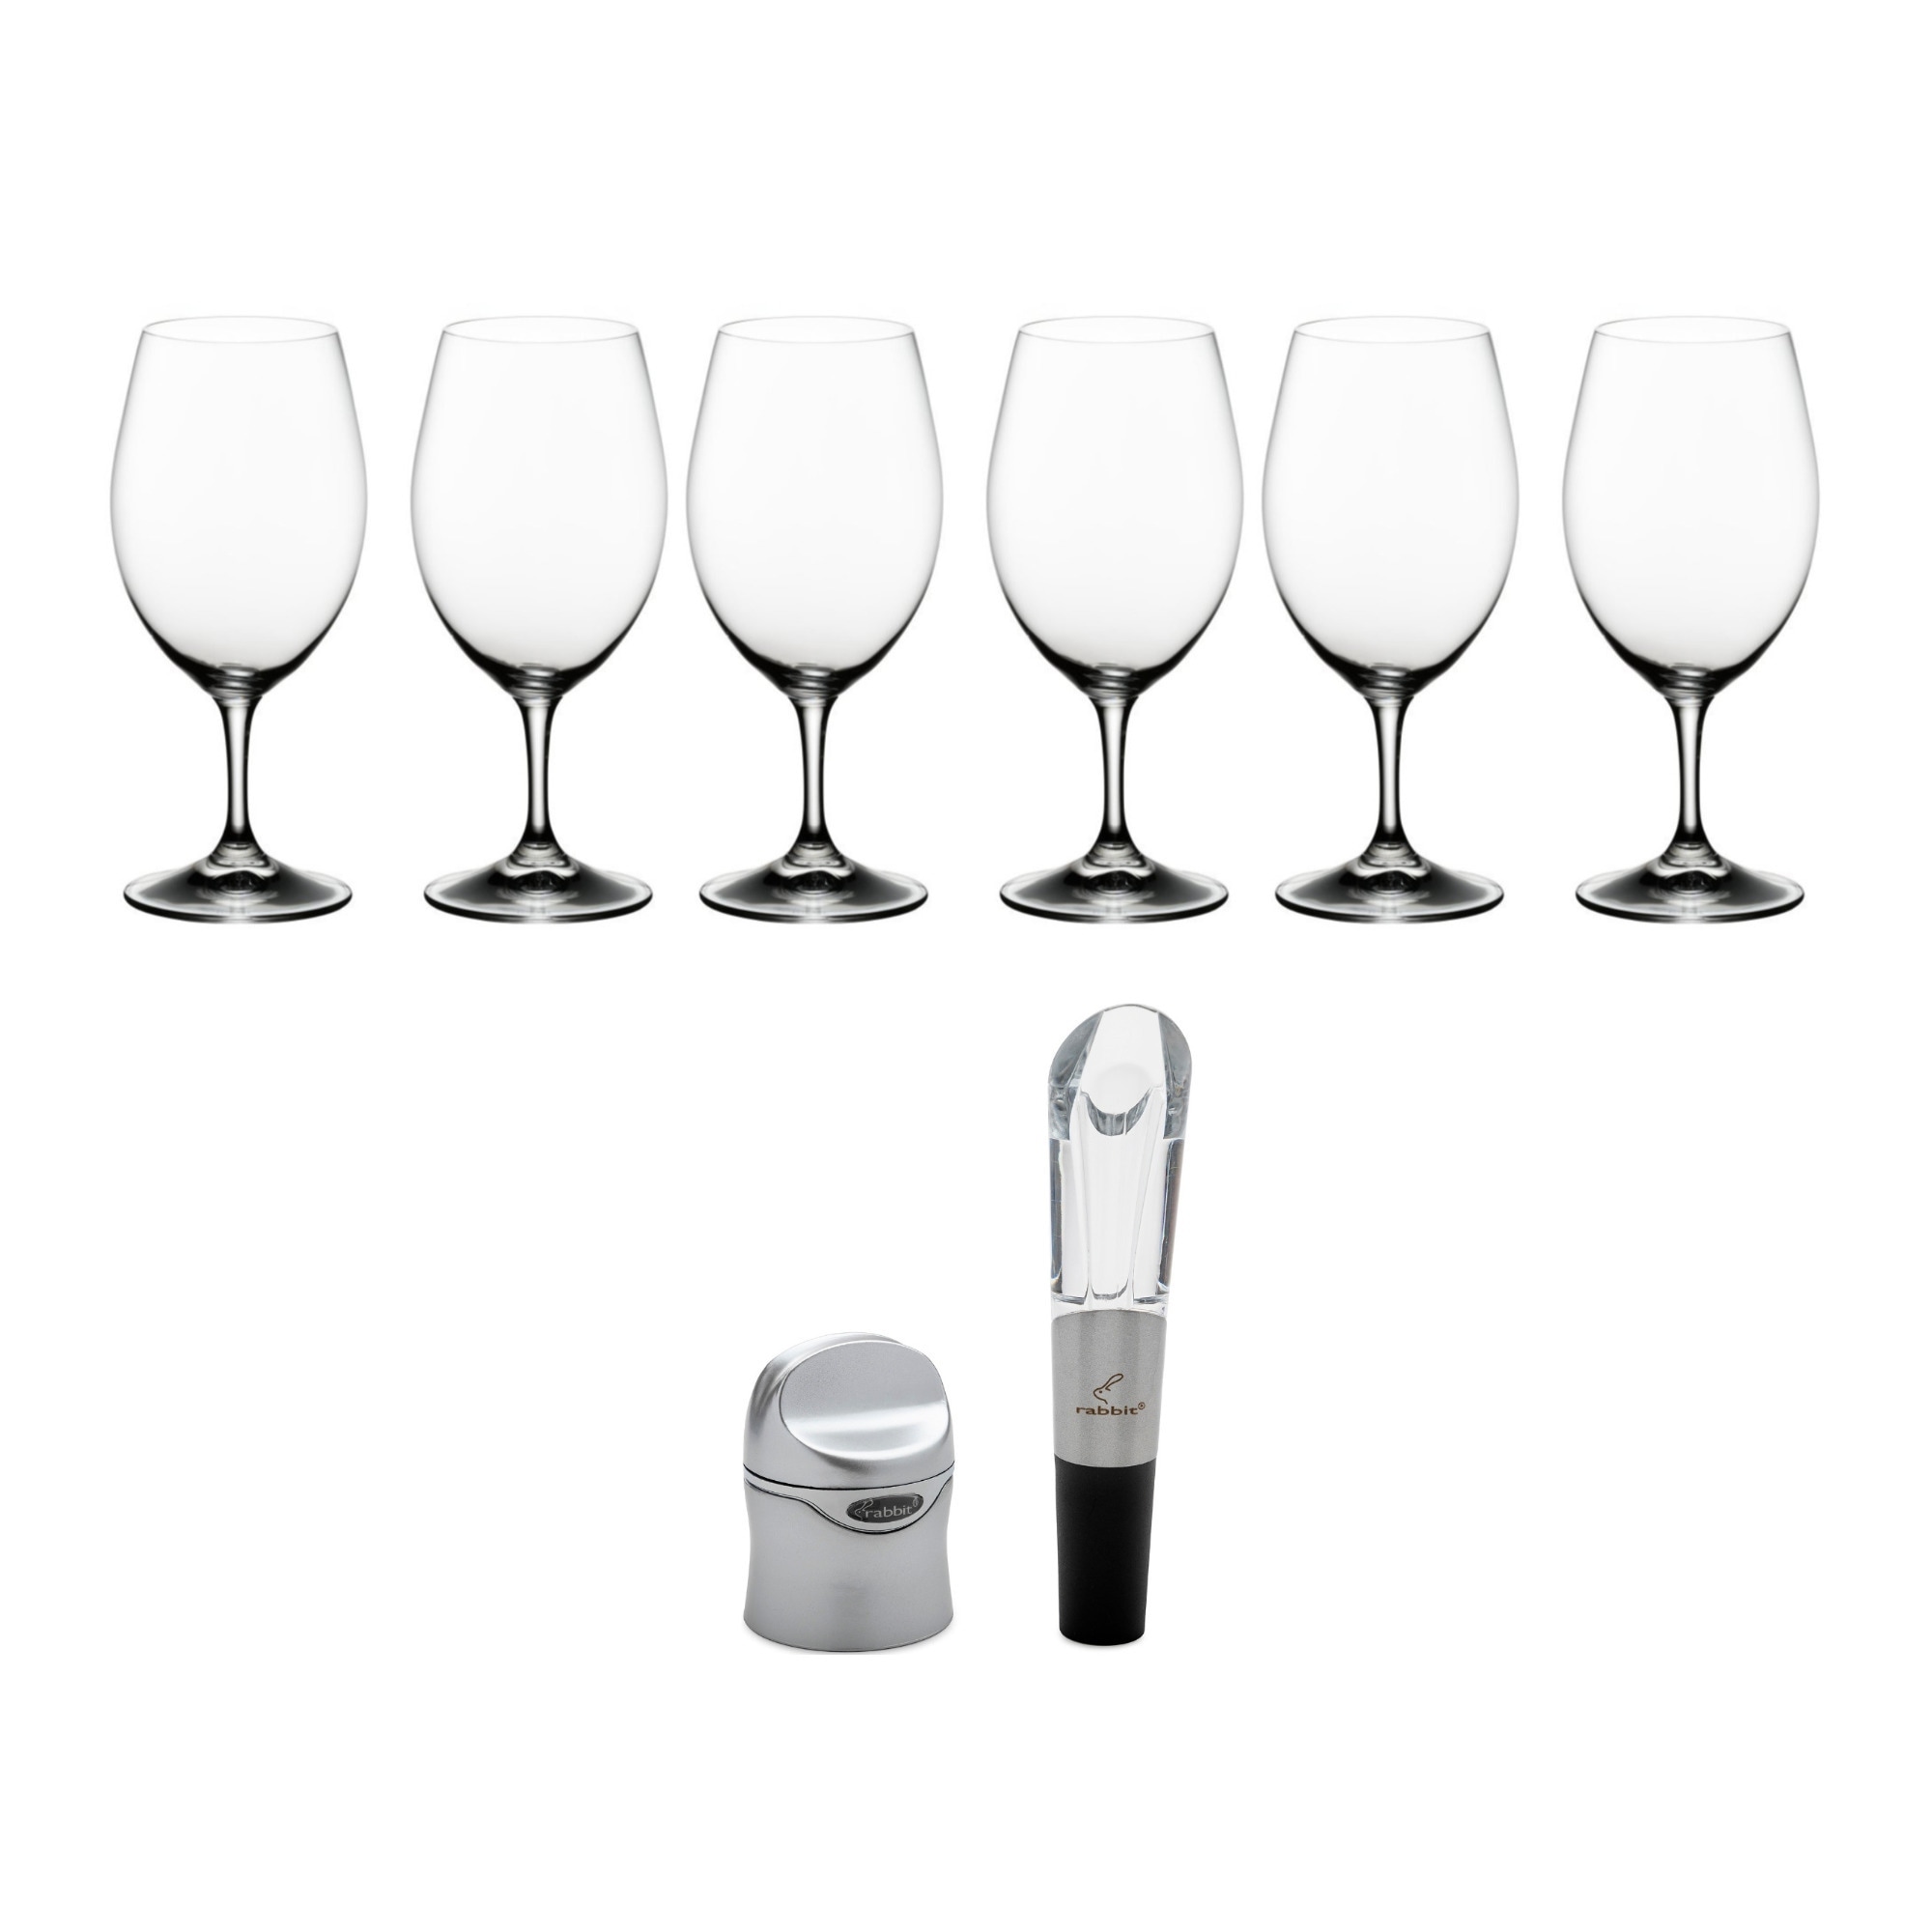 https://ak1.ostkcdn.com/images/products/is/images/direct/e64761c7340d49932d4cdc6cd2c6f7b85413fc5b/Riedel-Ouverture-Magnum-Wine-Glasses-Set-of-6-w--Sealer-%26-Aerator-Set.jpg